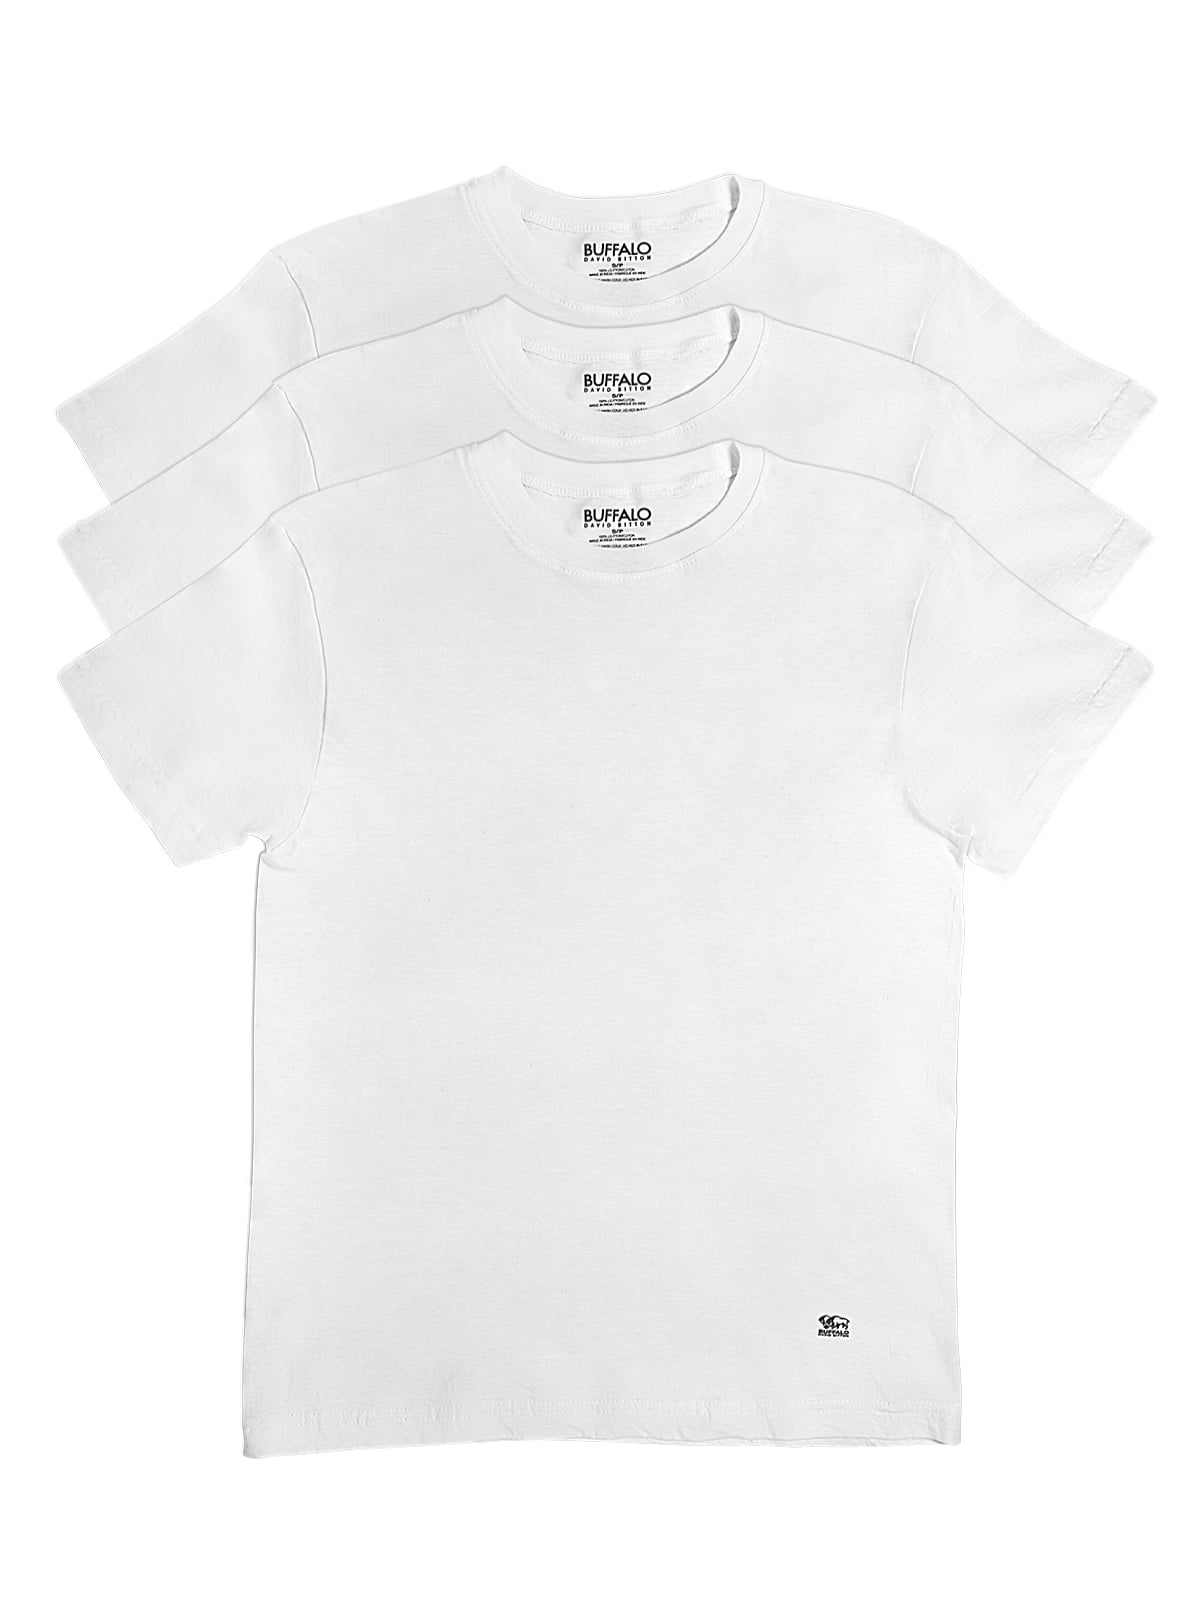 Buffalo David Bitton | 3-Pack Men's White Crew Neck T-Shirt | 100% Cotton |  Tagless (White, Medium)